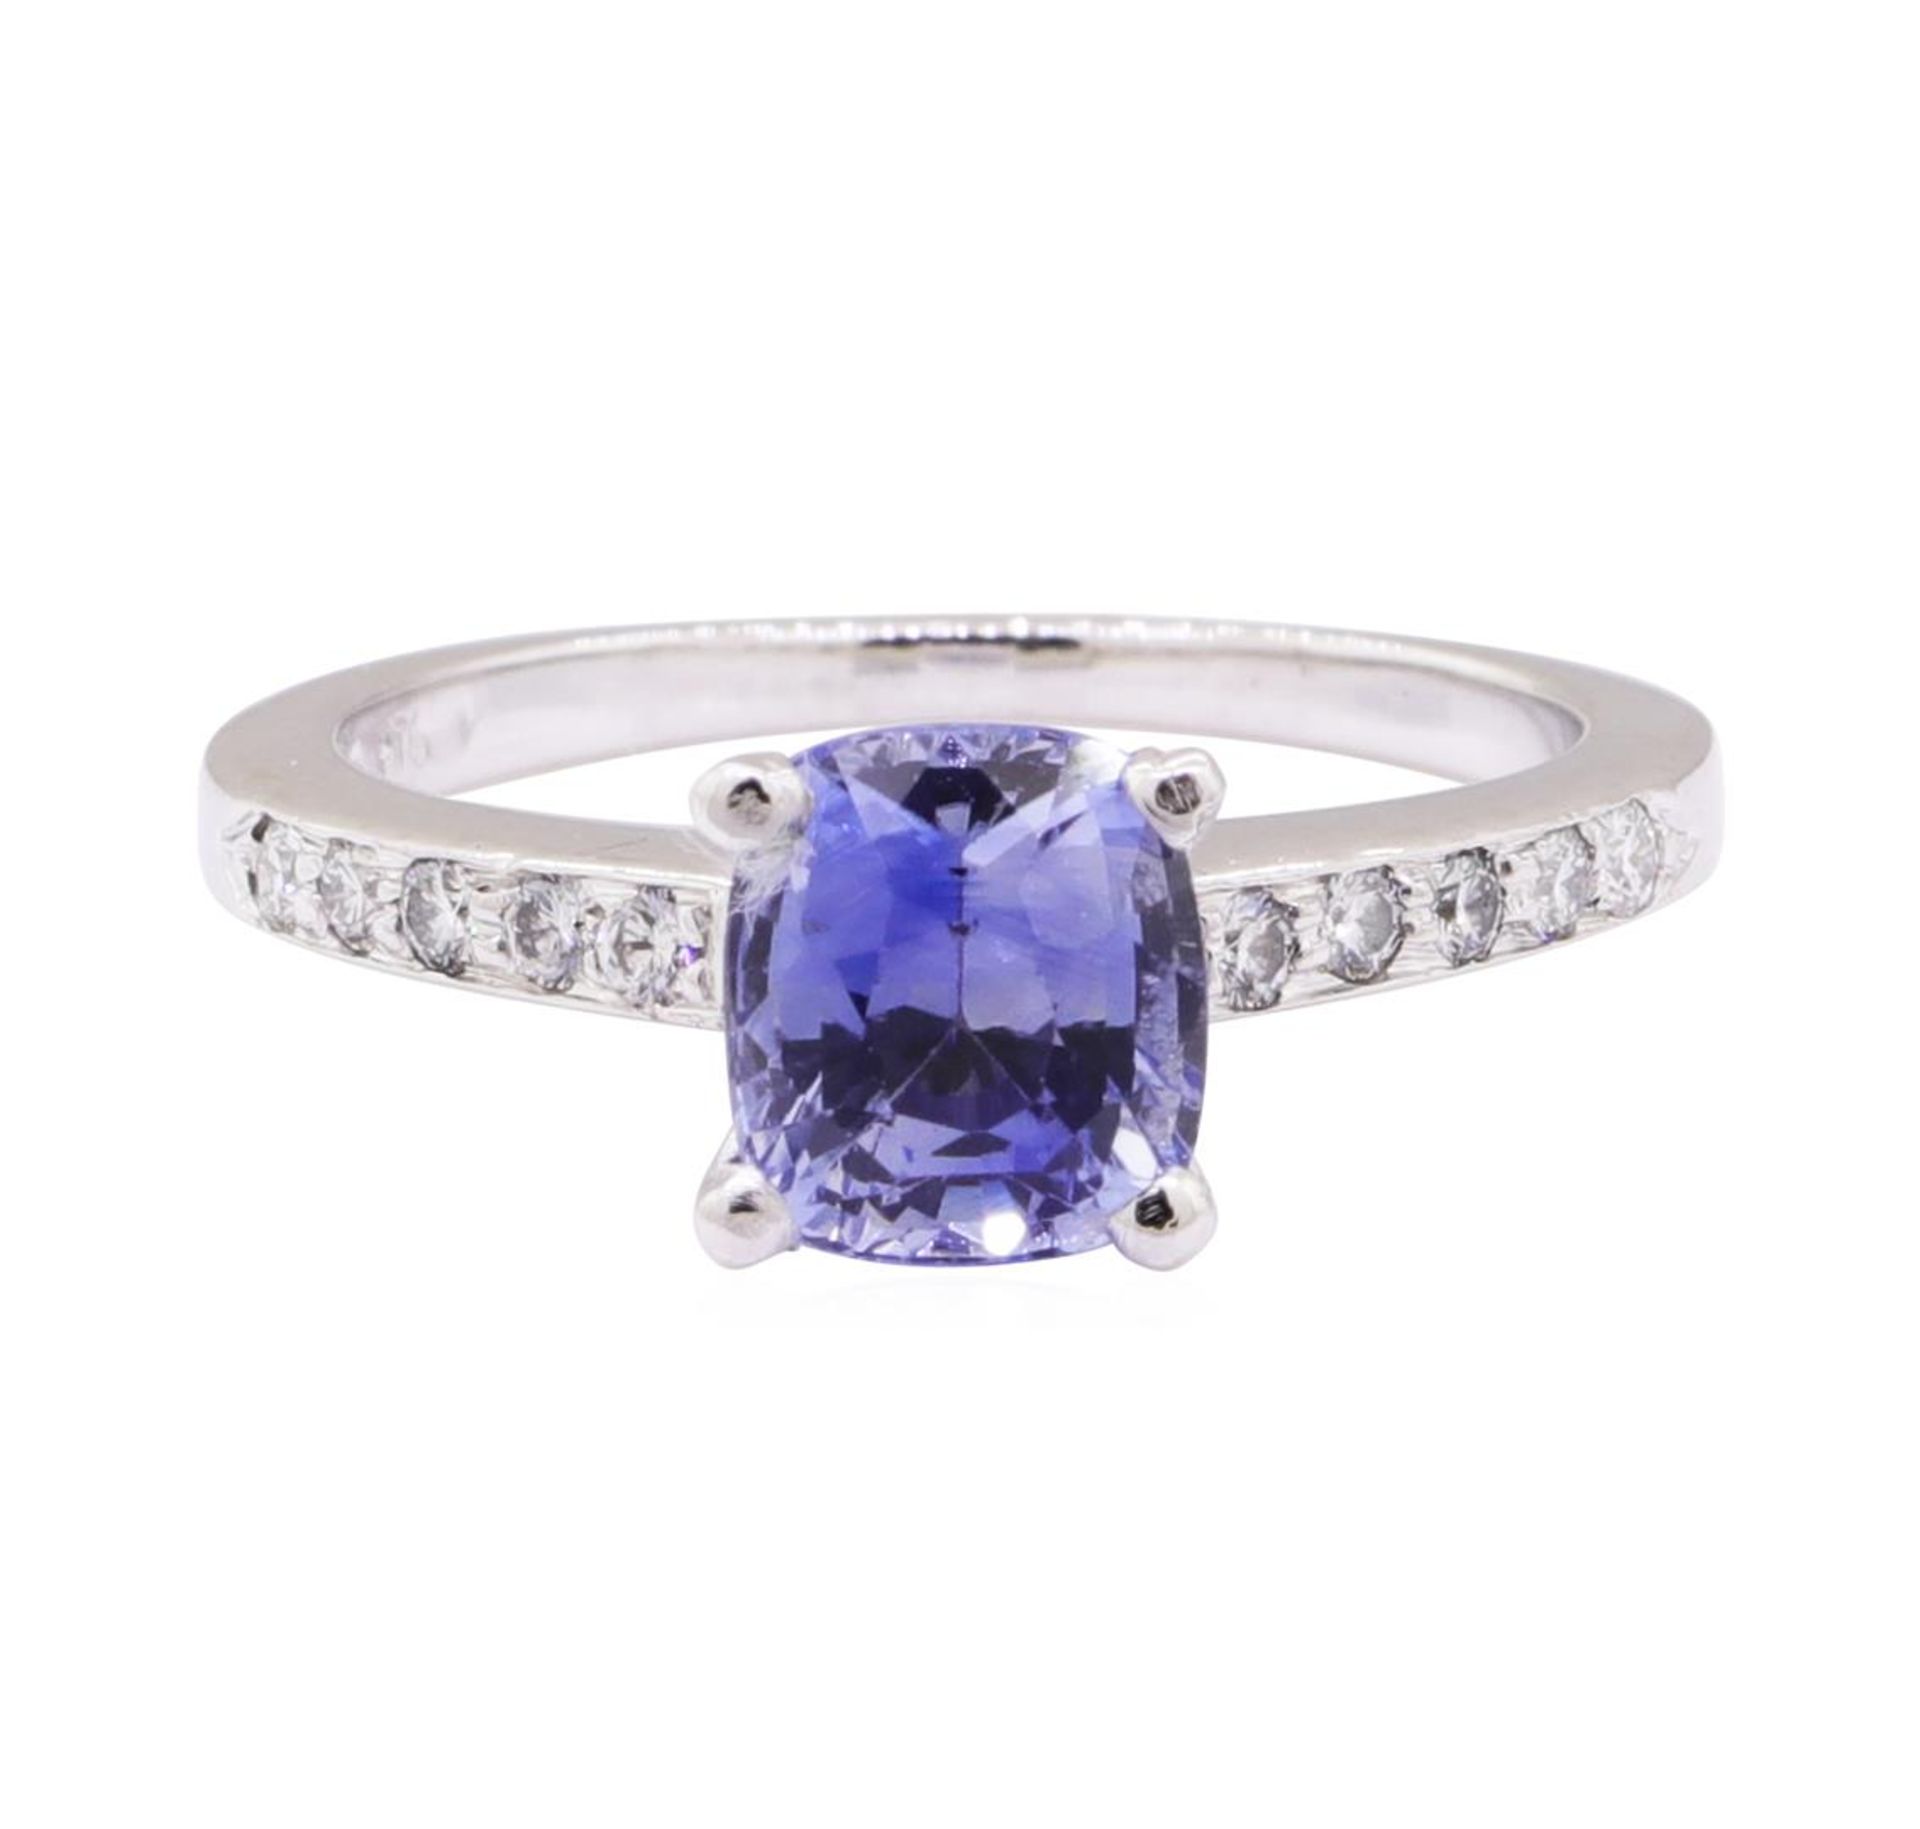 2.06 ctw Blue Sapphire and Diamond Ring - Platinum - Image 2 of 4